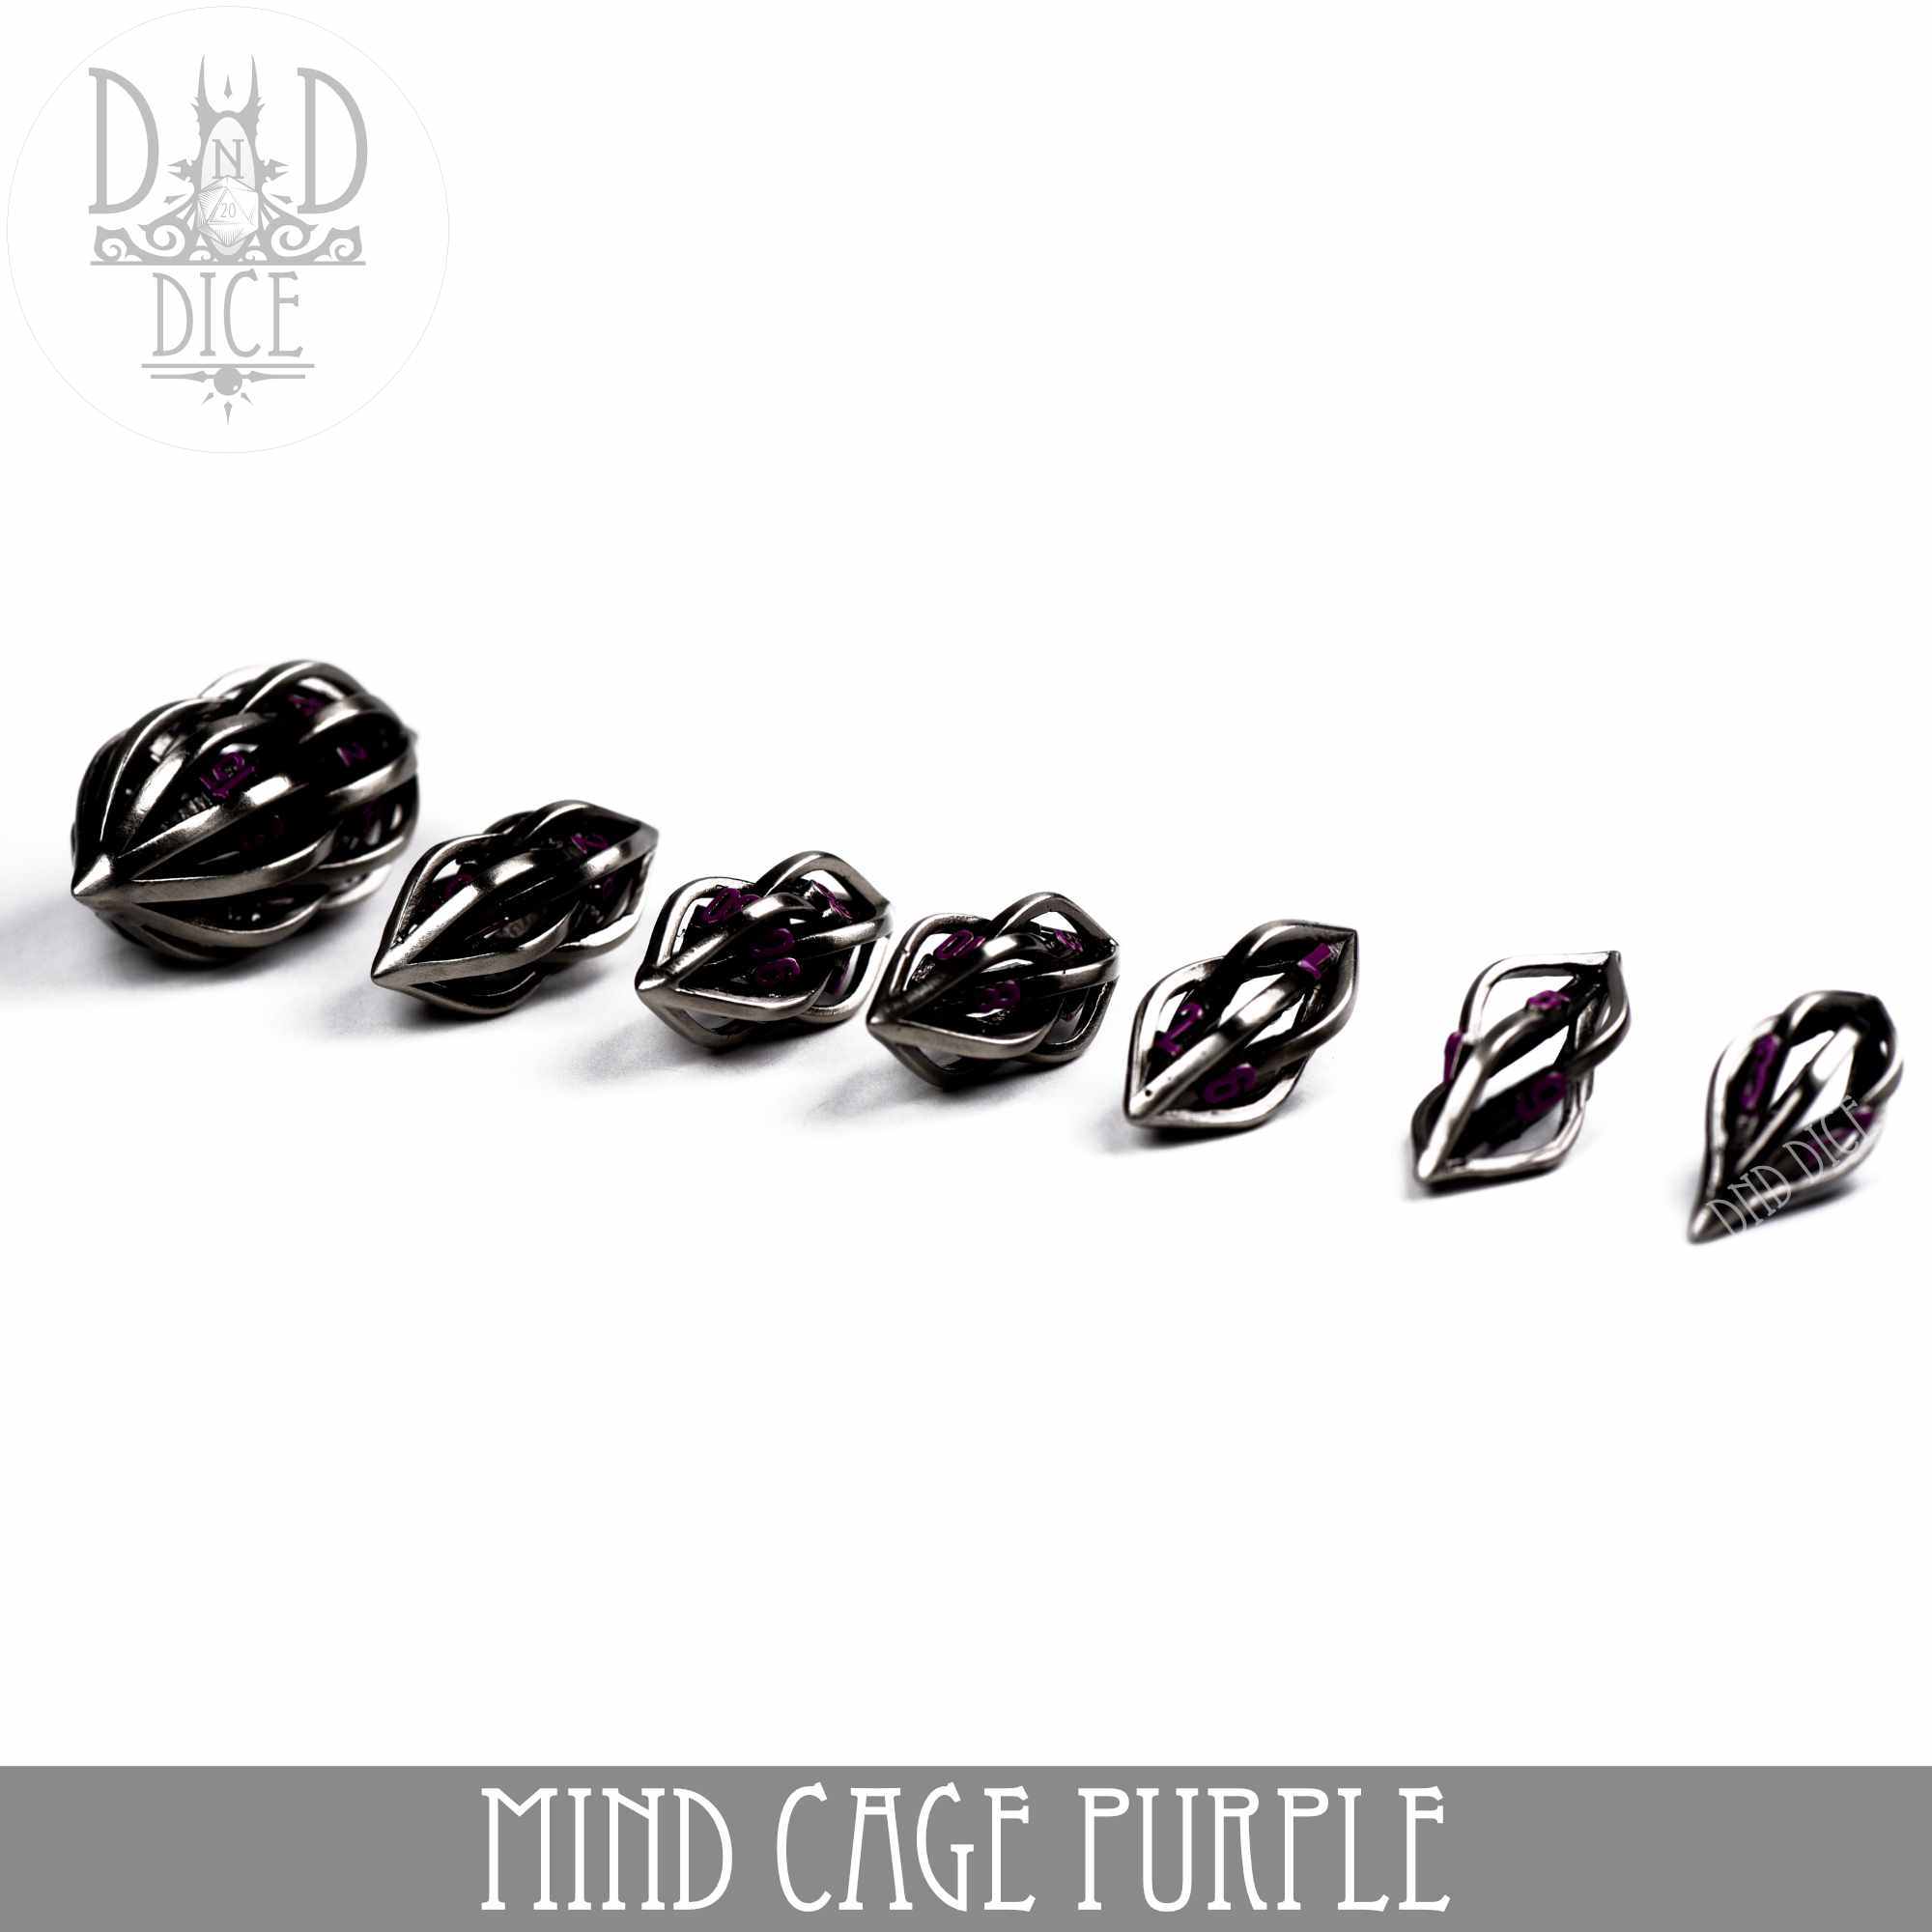 Mind Cage Purple Hollow Metal Dice Set (Gift Box)